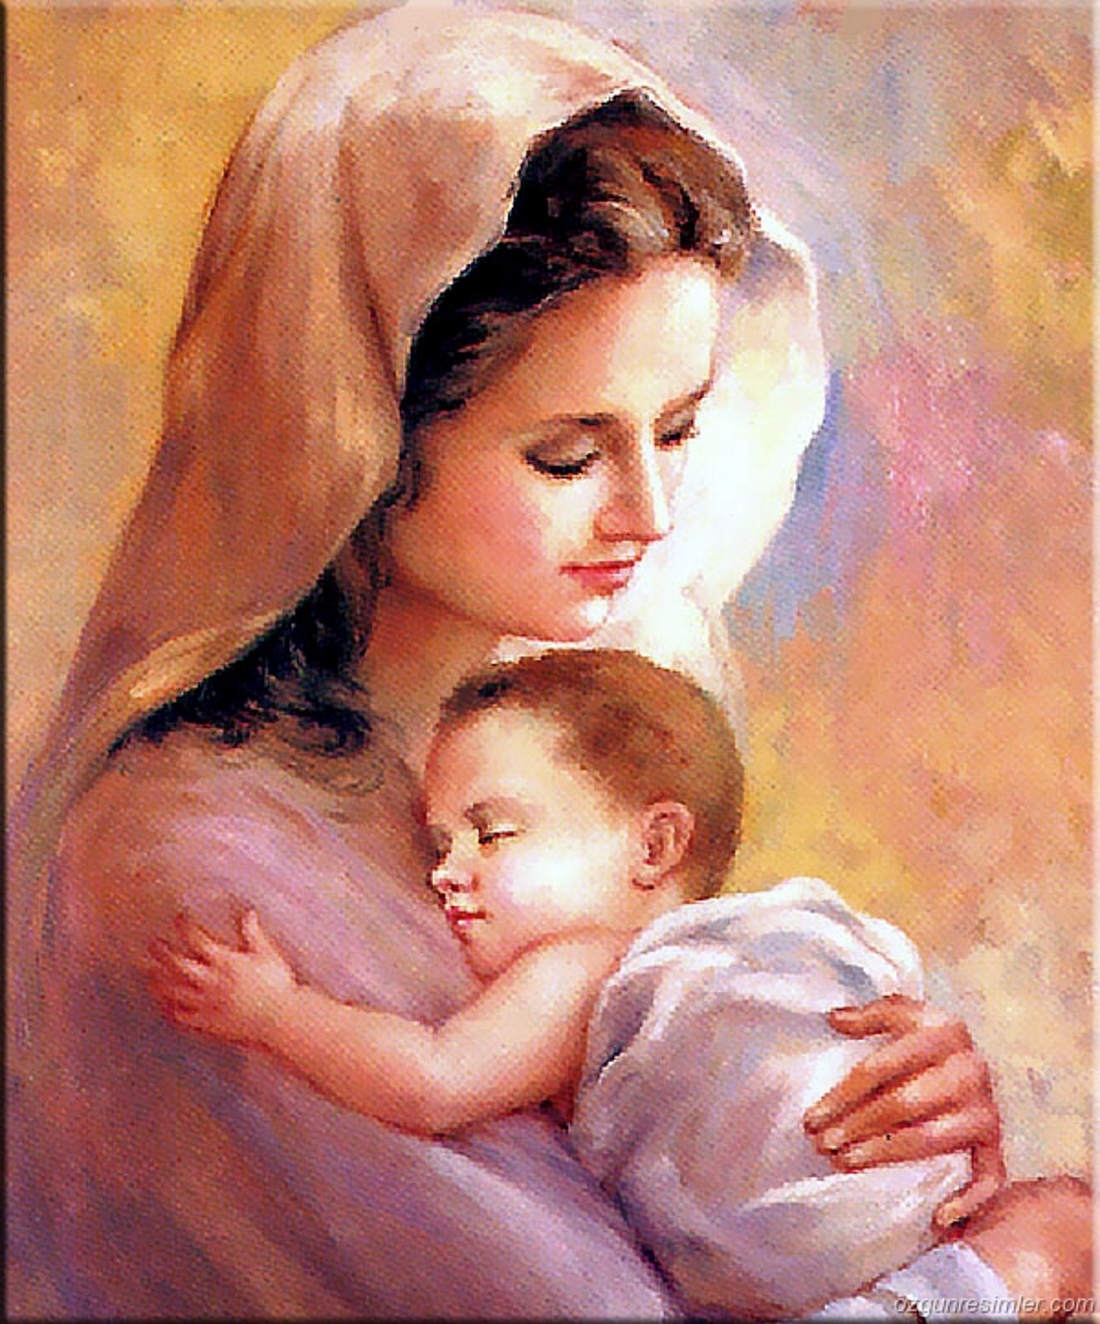 Картинка мама. Образ матери. Картина мама с ребенком на руках. Женщина с ребенком на руках. Картина женщина с ребенком на руках.